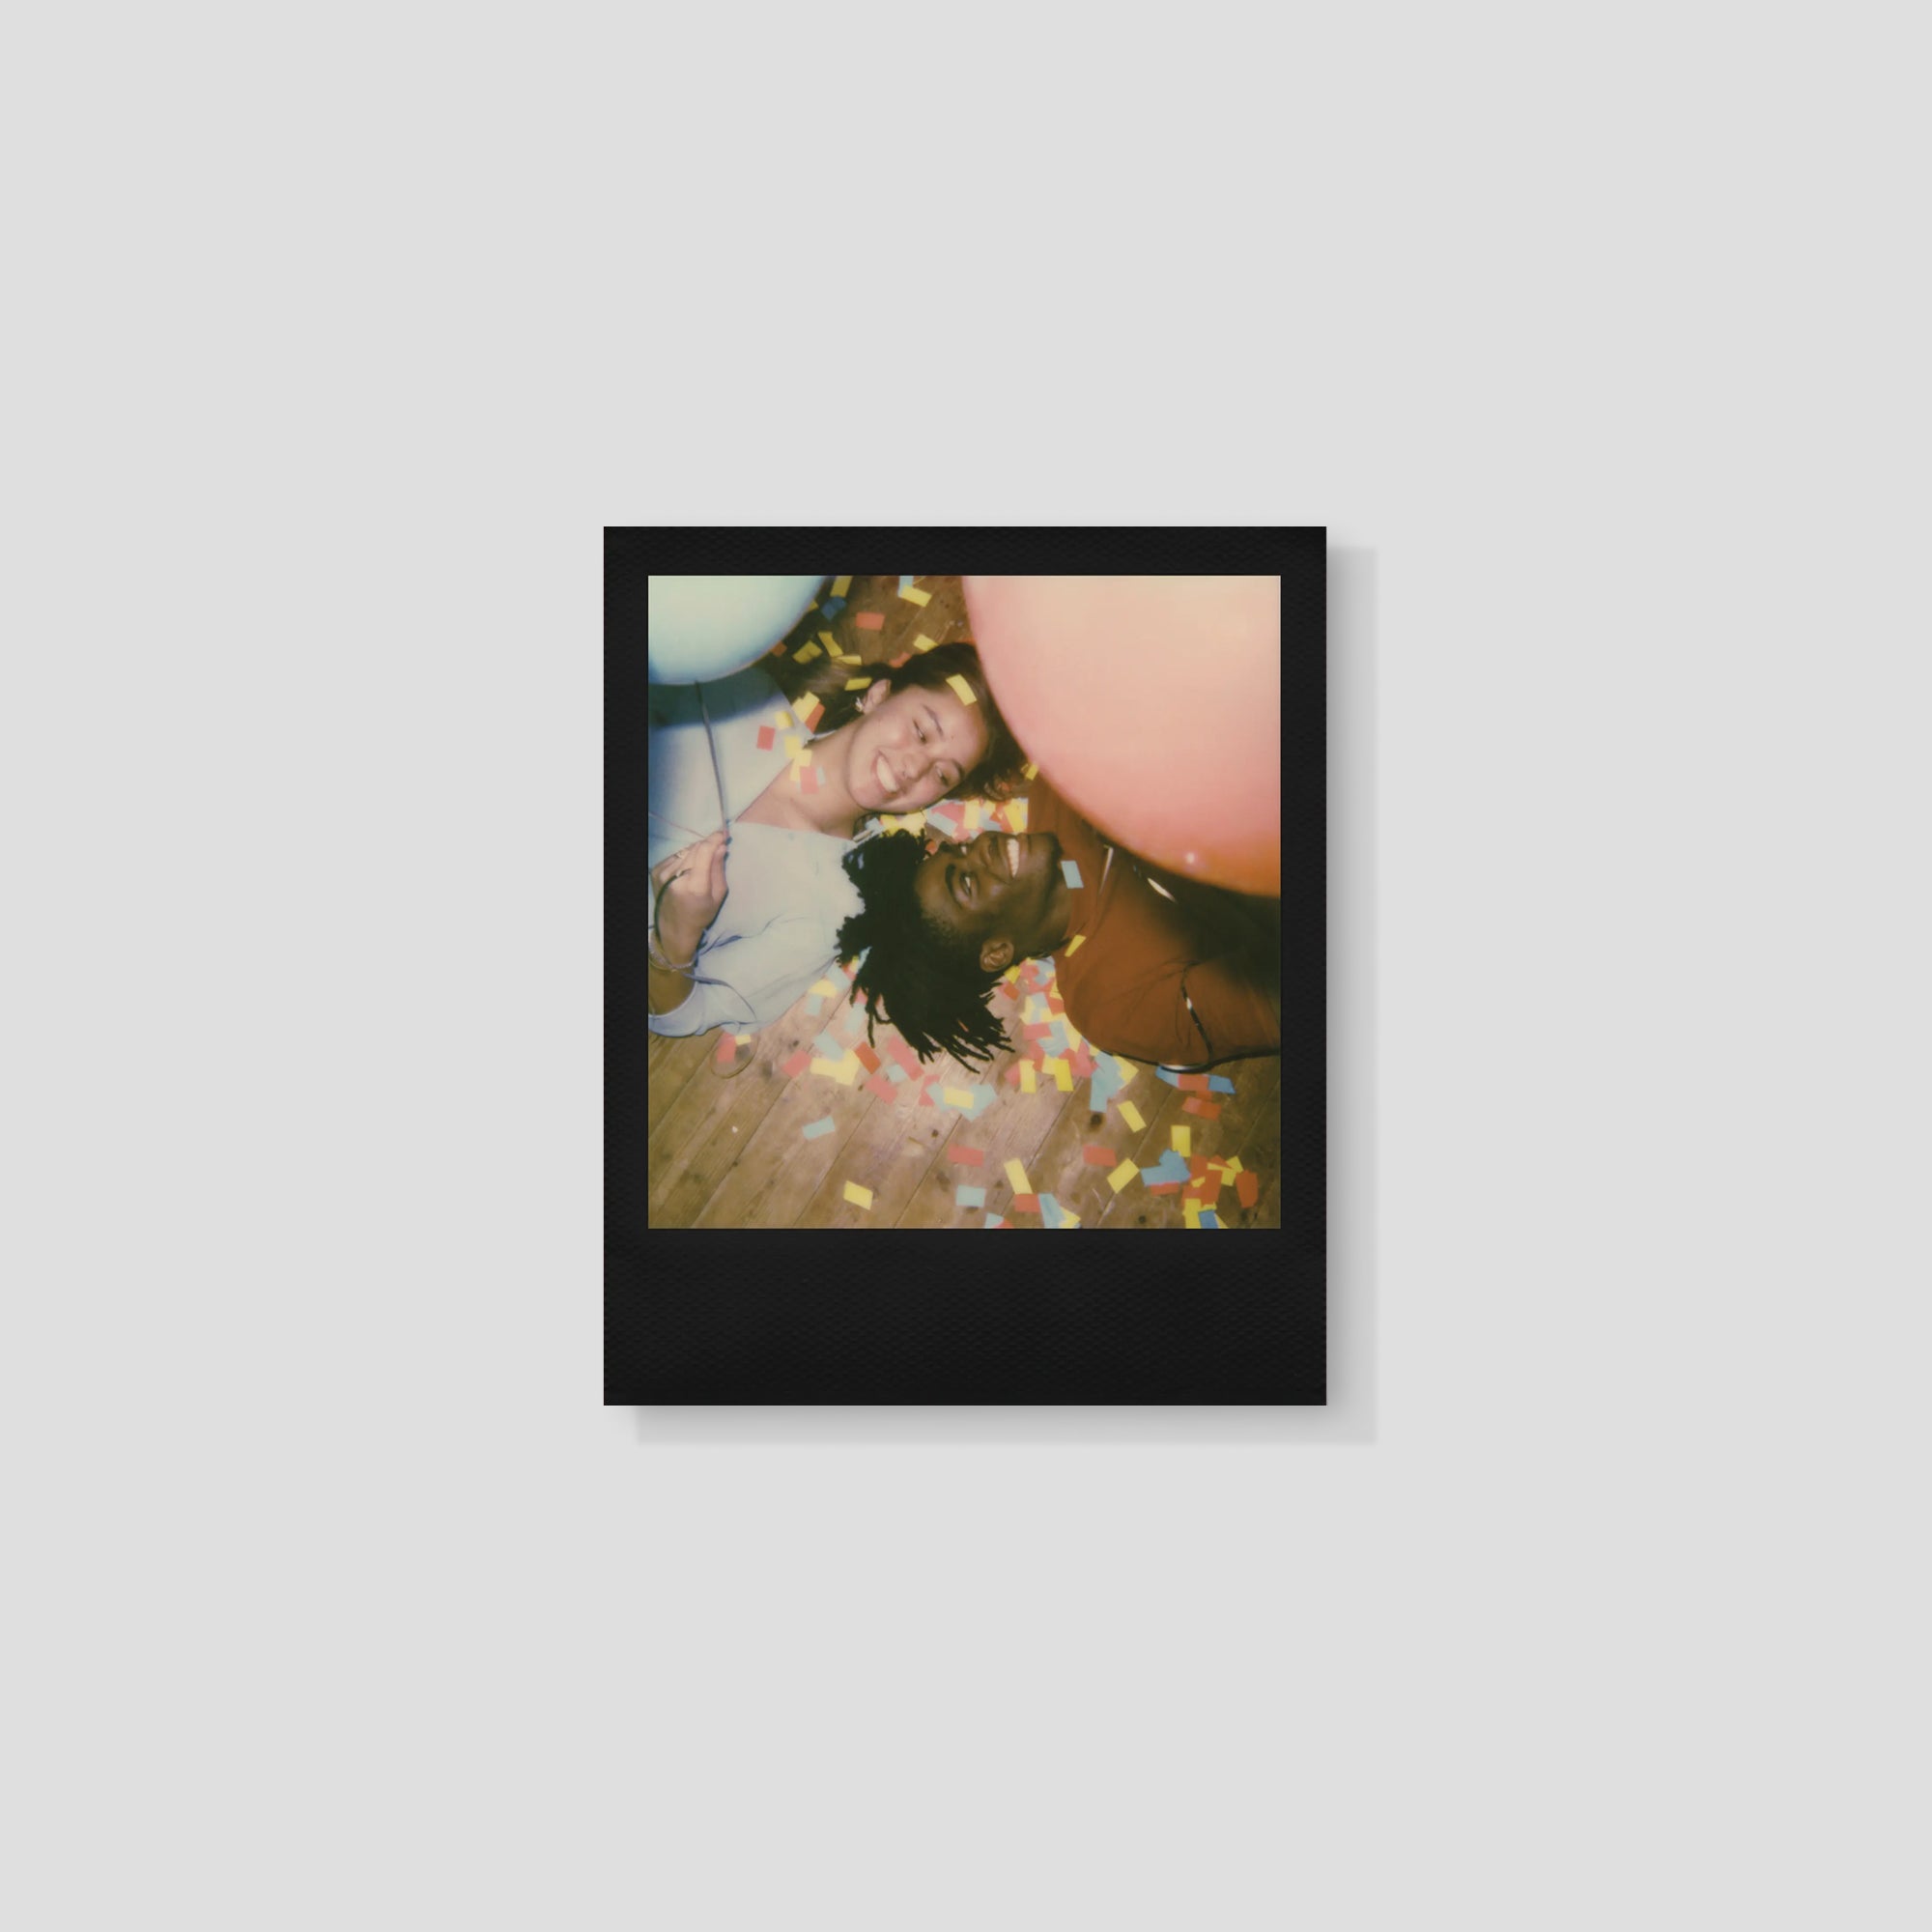 Polaroid Color i Type Film - Black Frame Edition